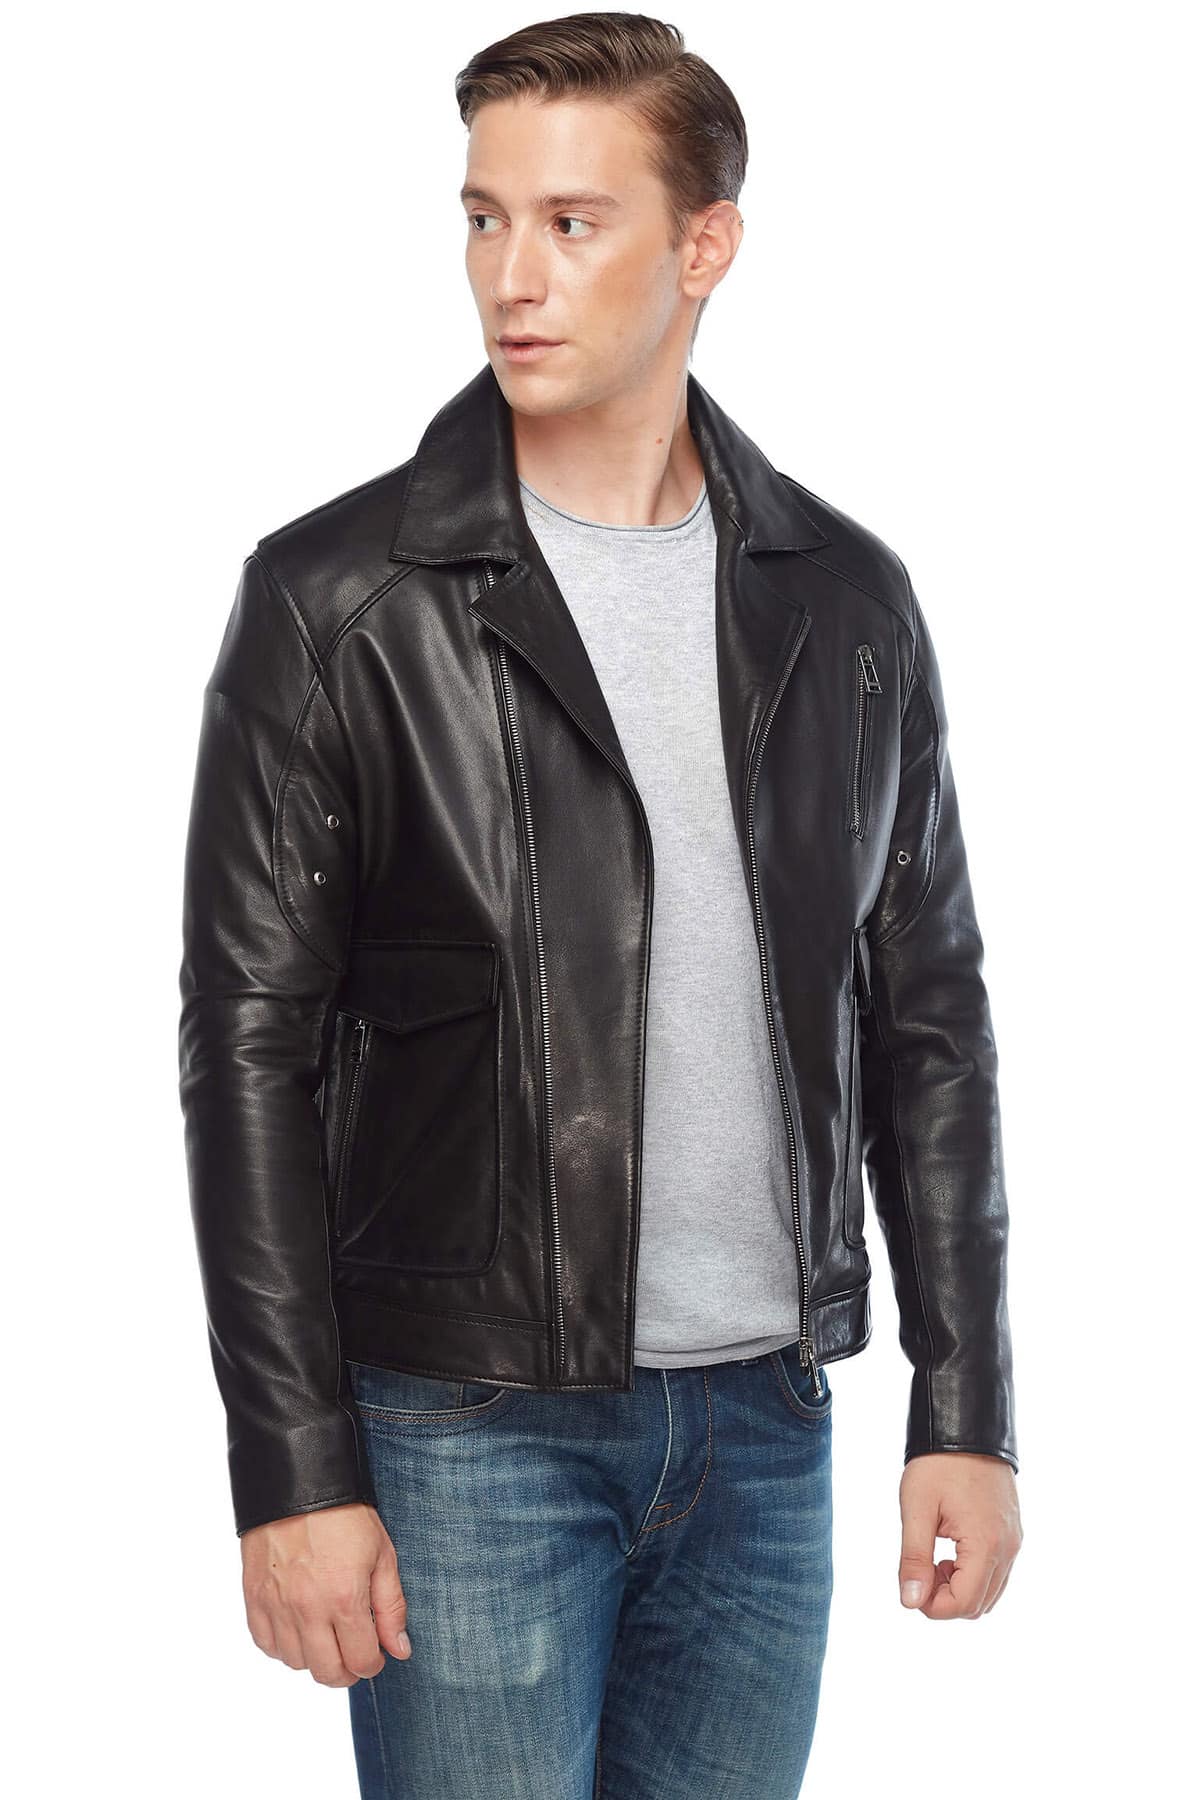 Orlando Bloom Genuine Leather Coat Black Side